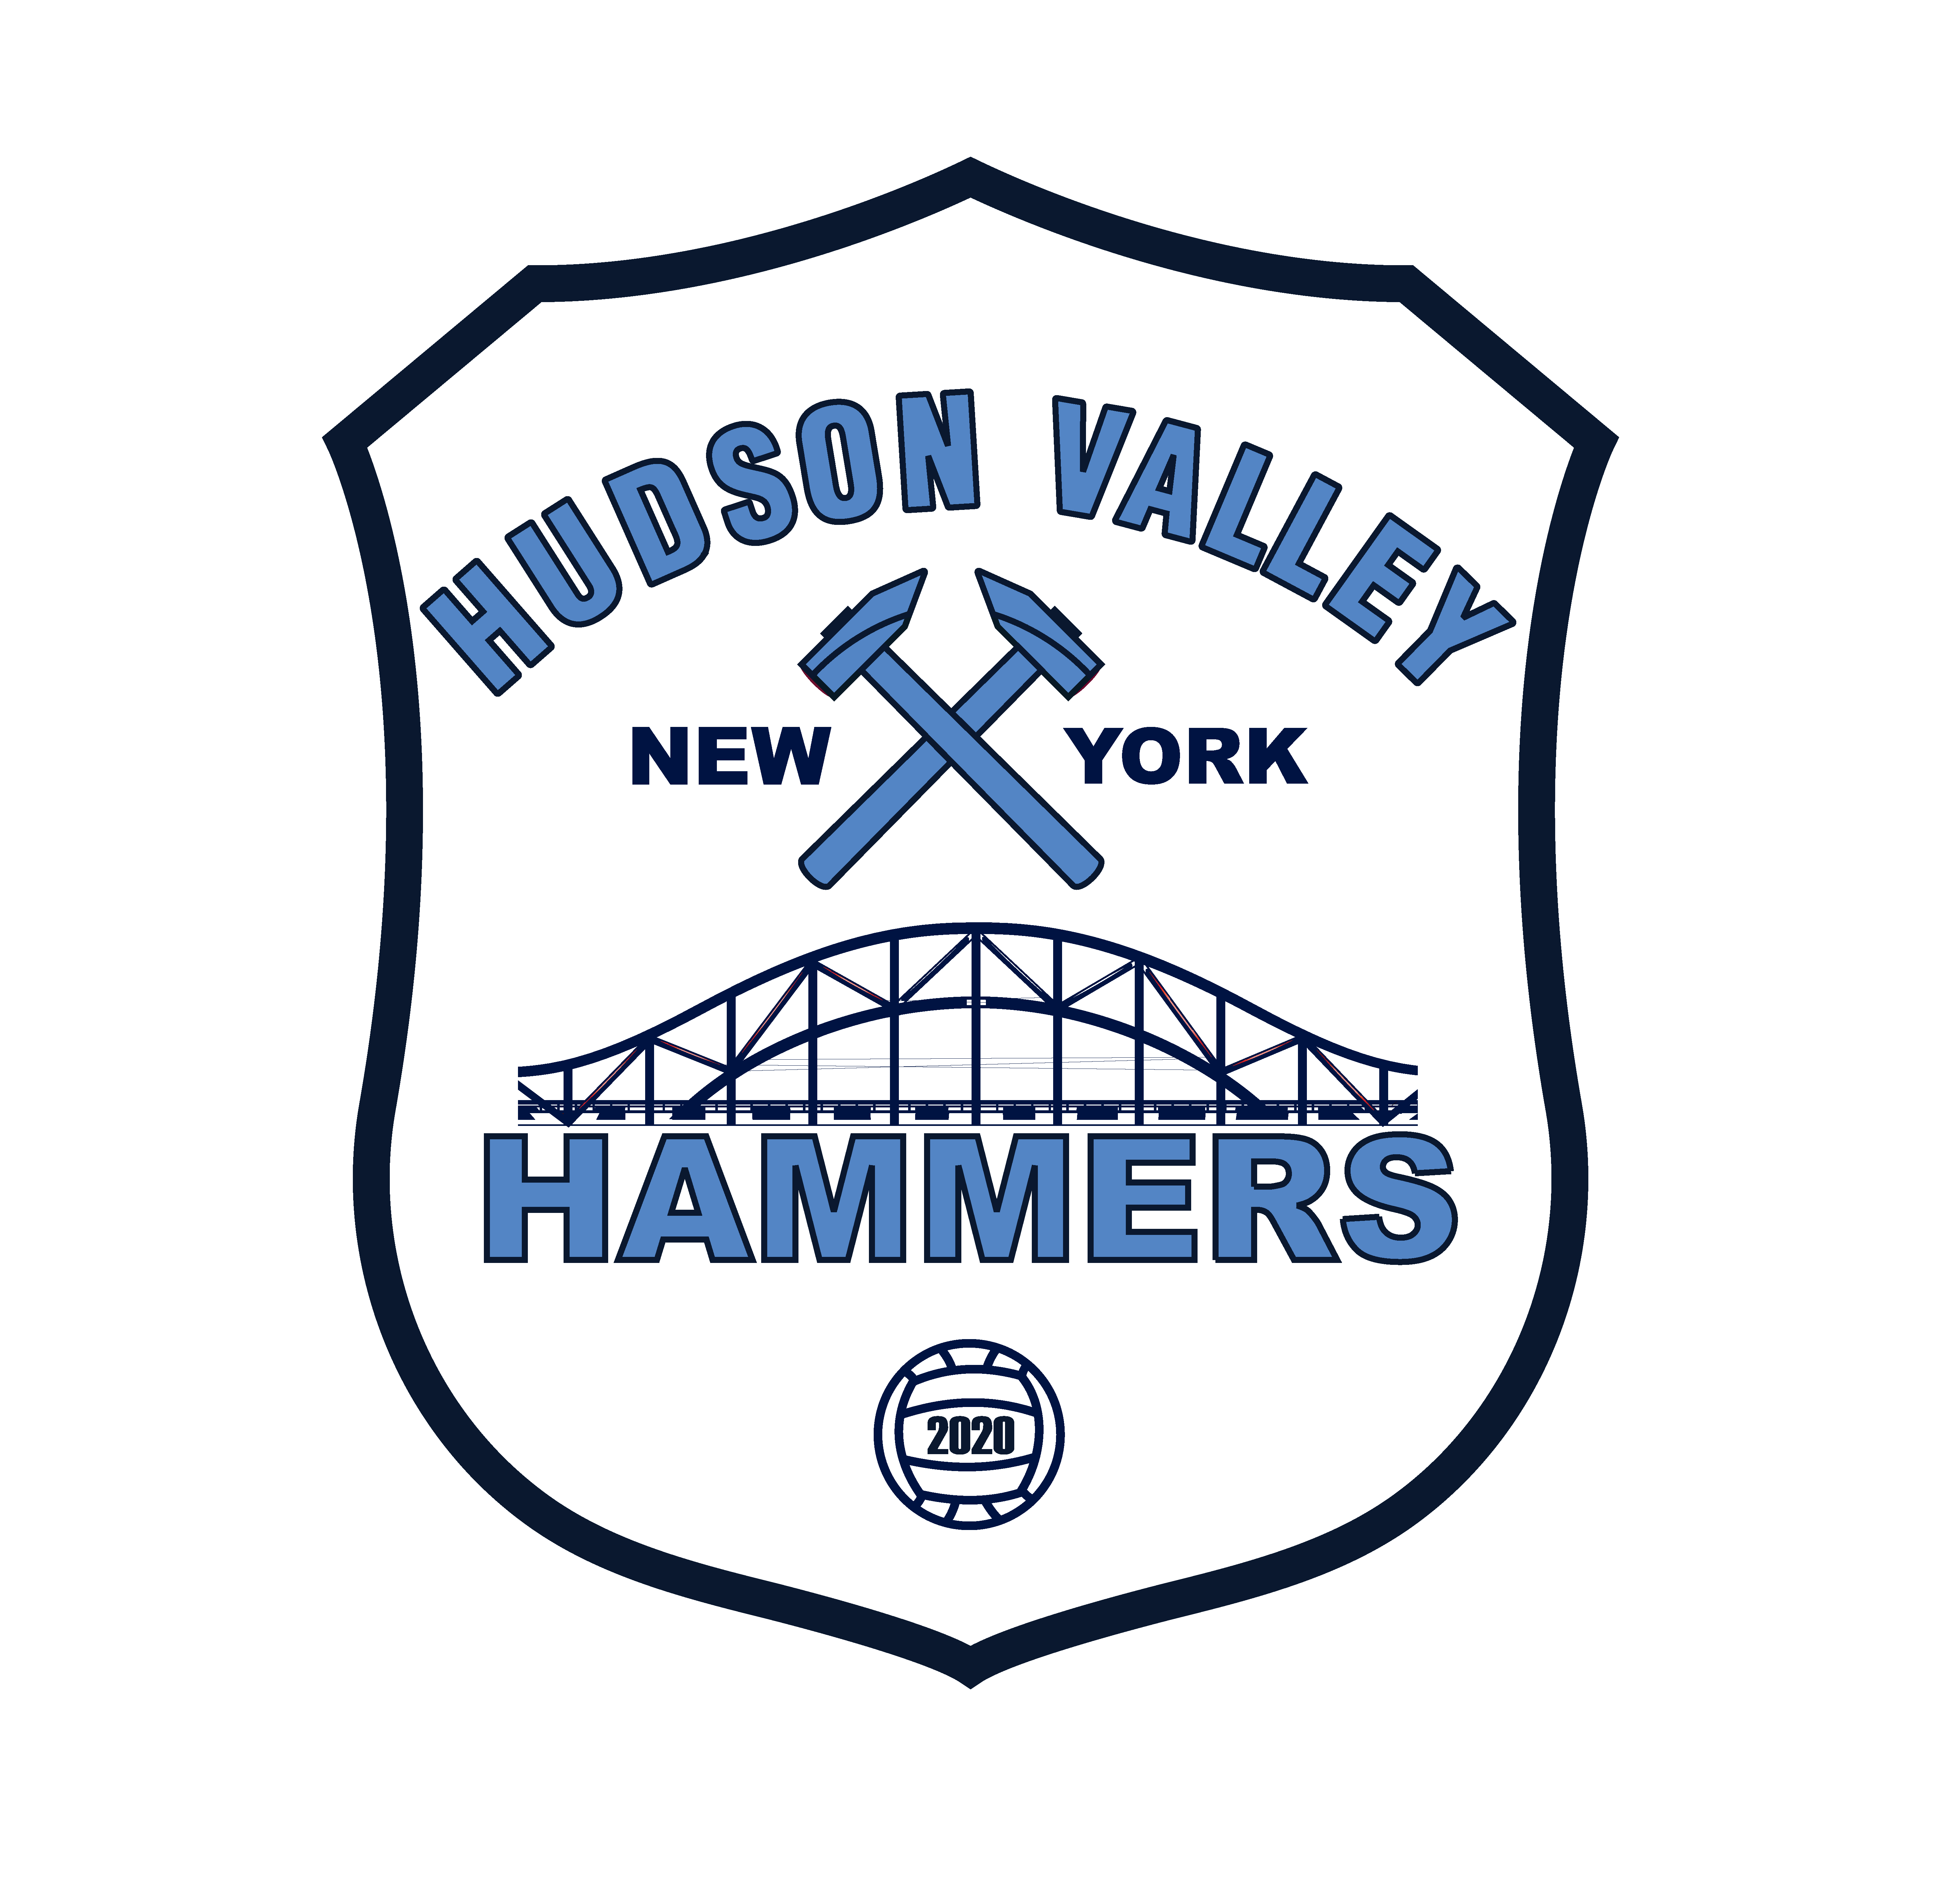 https://www.mediasolstice.com/wp-content/uploads/2022/05/Hudson-Valley-Hammers-New-Design-Colorways-2020-01-1.png